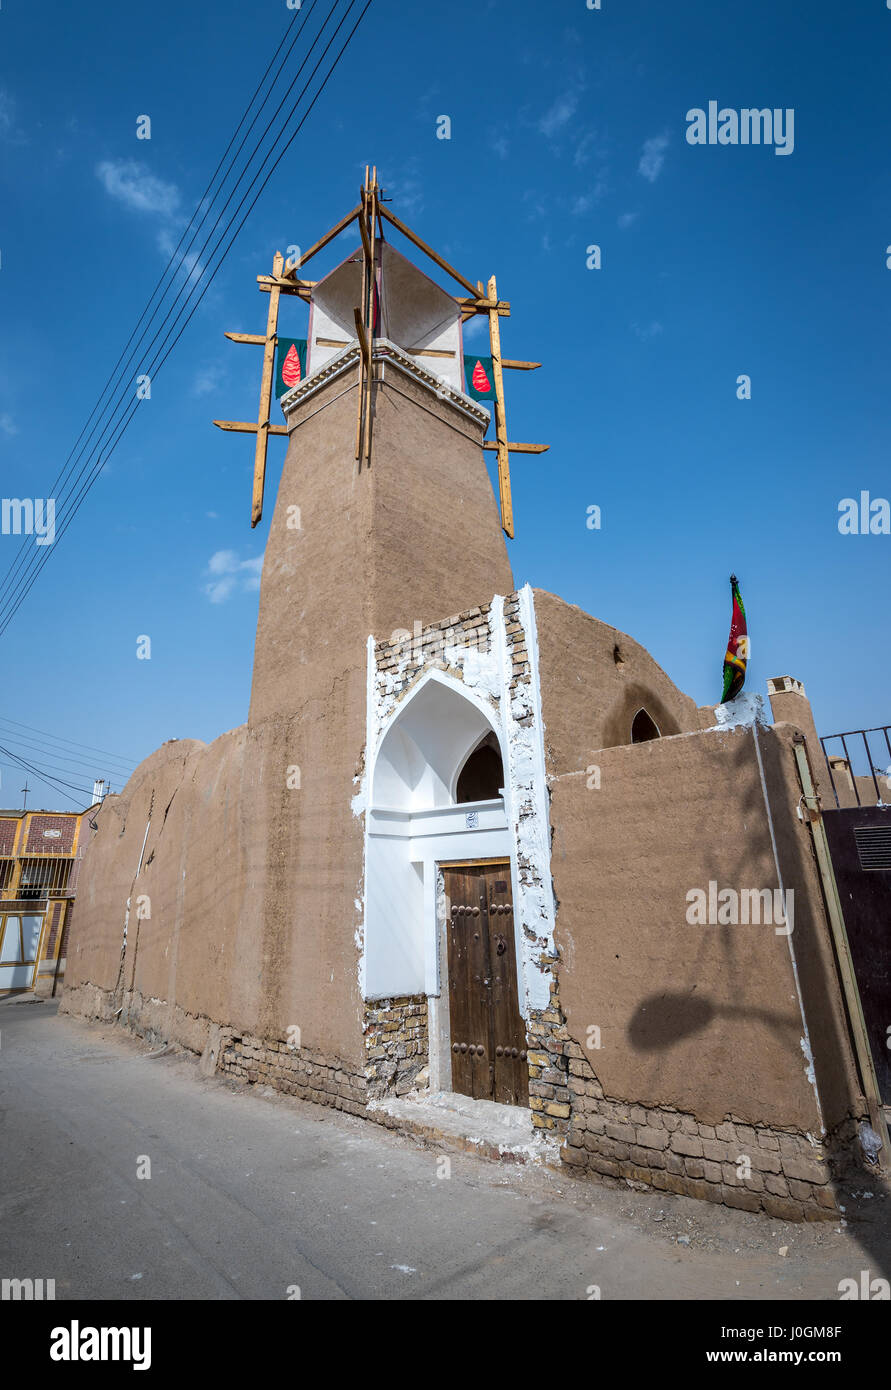 Wind catcher torre sulla città vecchia di Kashan città, capitale della contea di Kashan dell'Iran Foto Stock